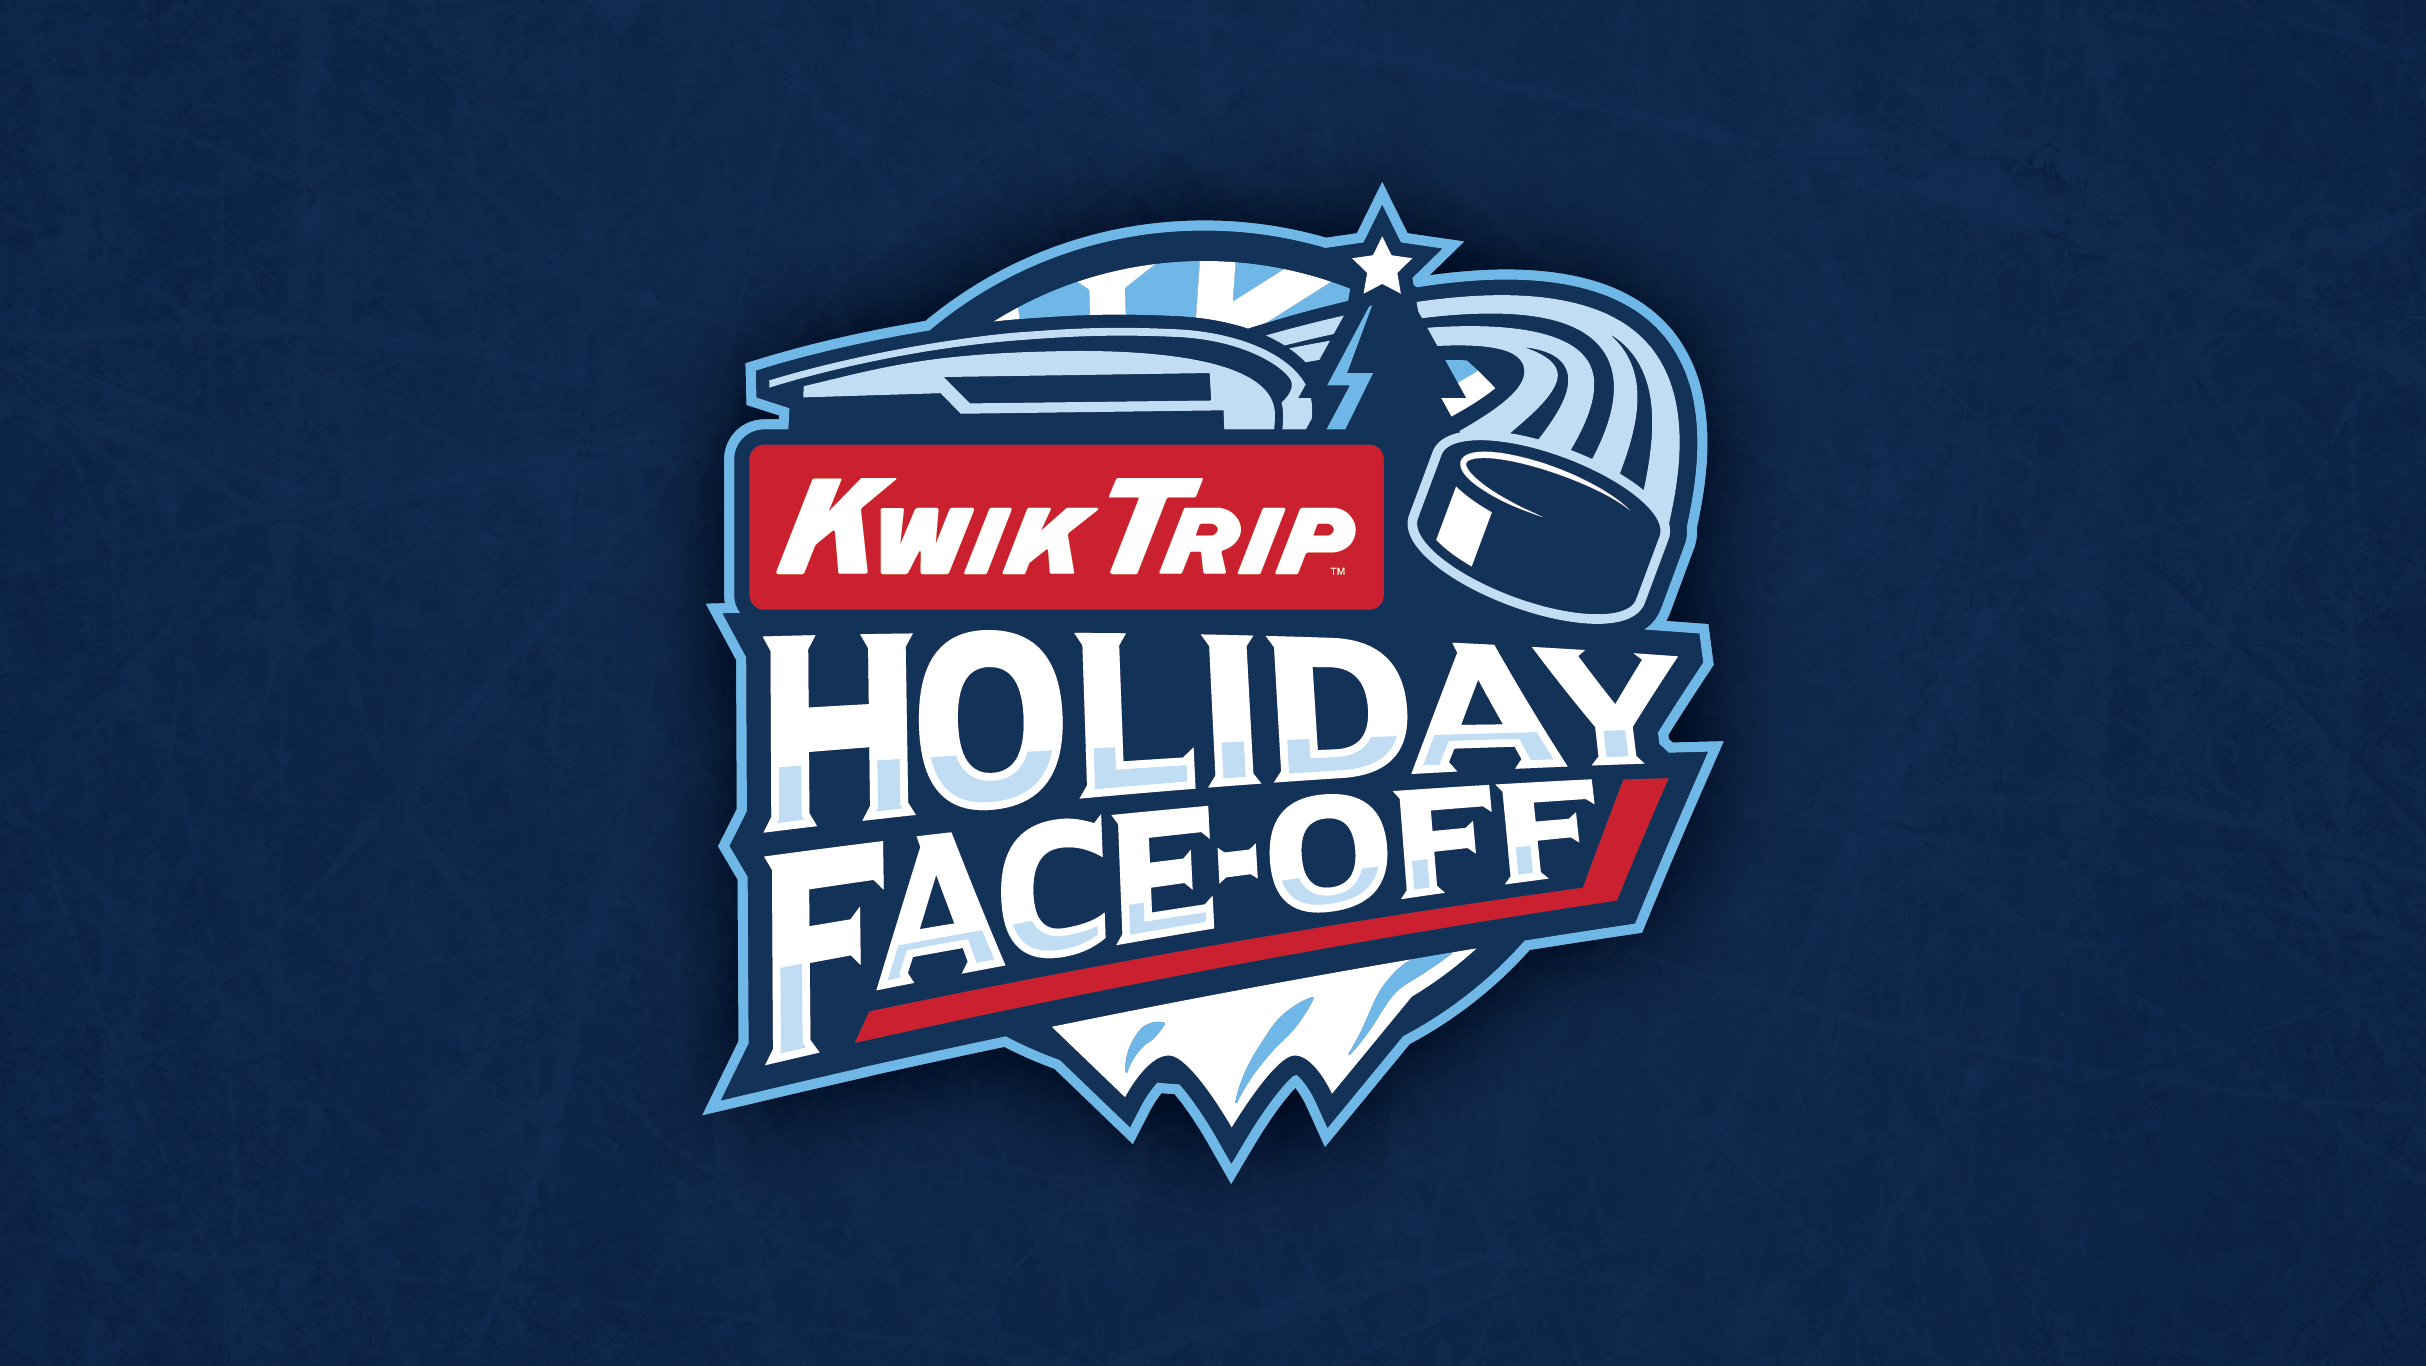 Kwik Trip Holiday Face-Off presale information on freepresalepasswords.com